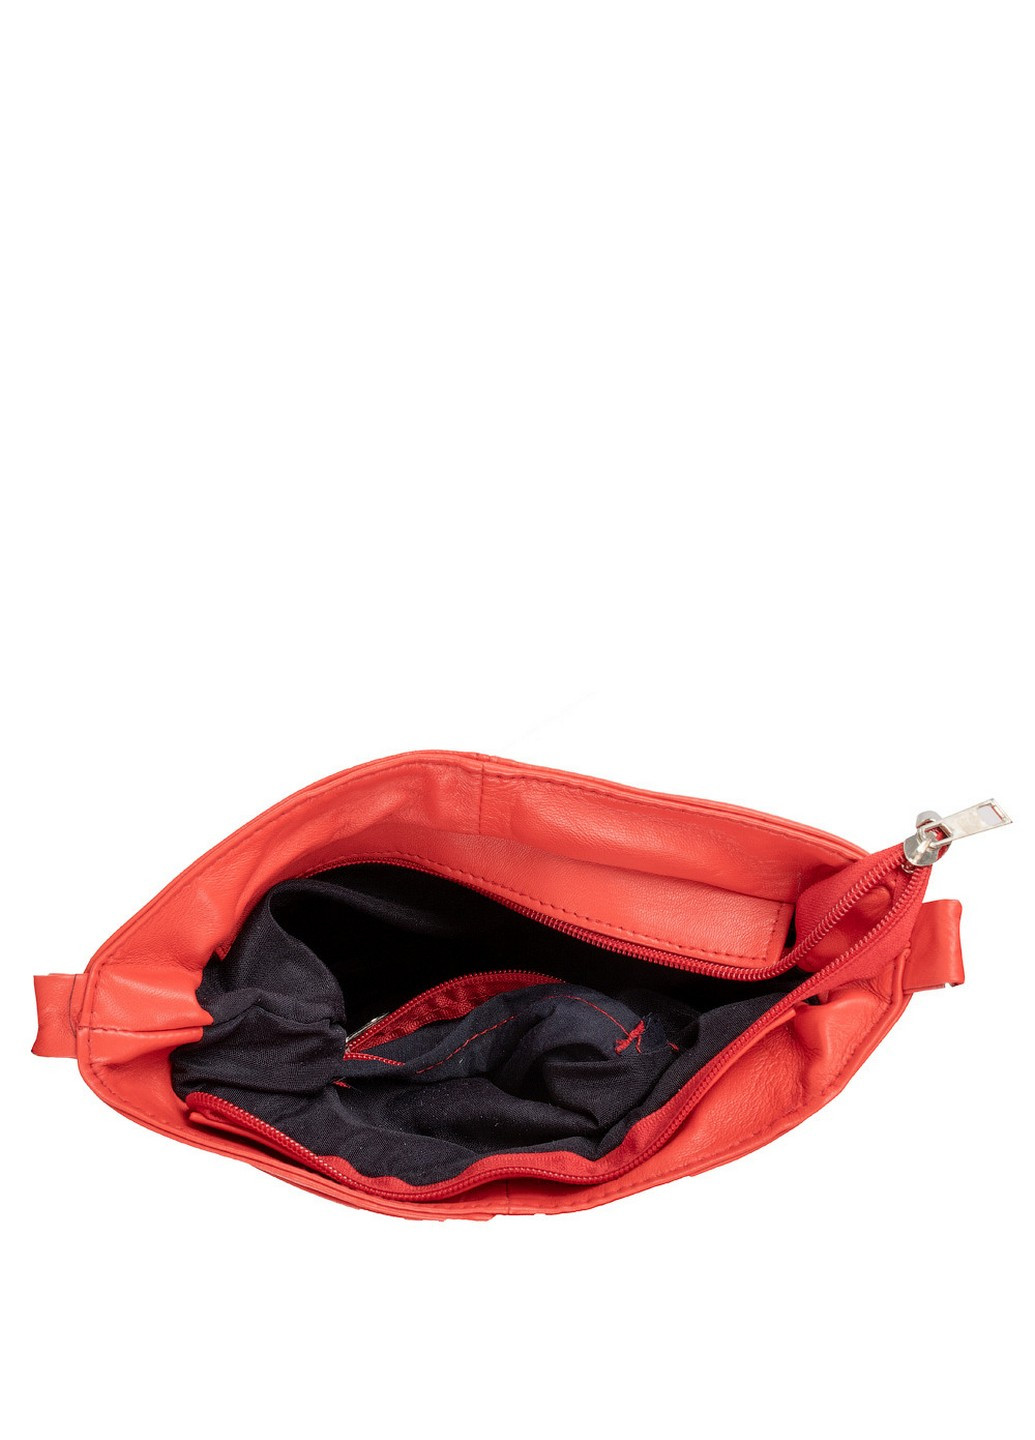 Кожаная сумка-планшет 23,5х24х8,5 см TuNoNa (253102831)